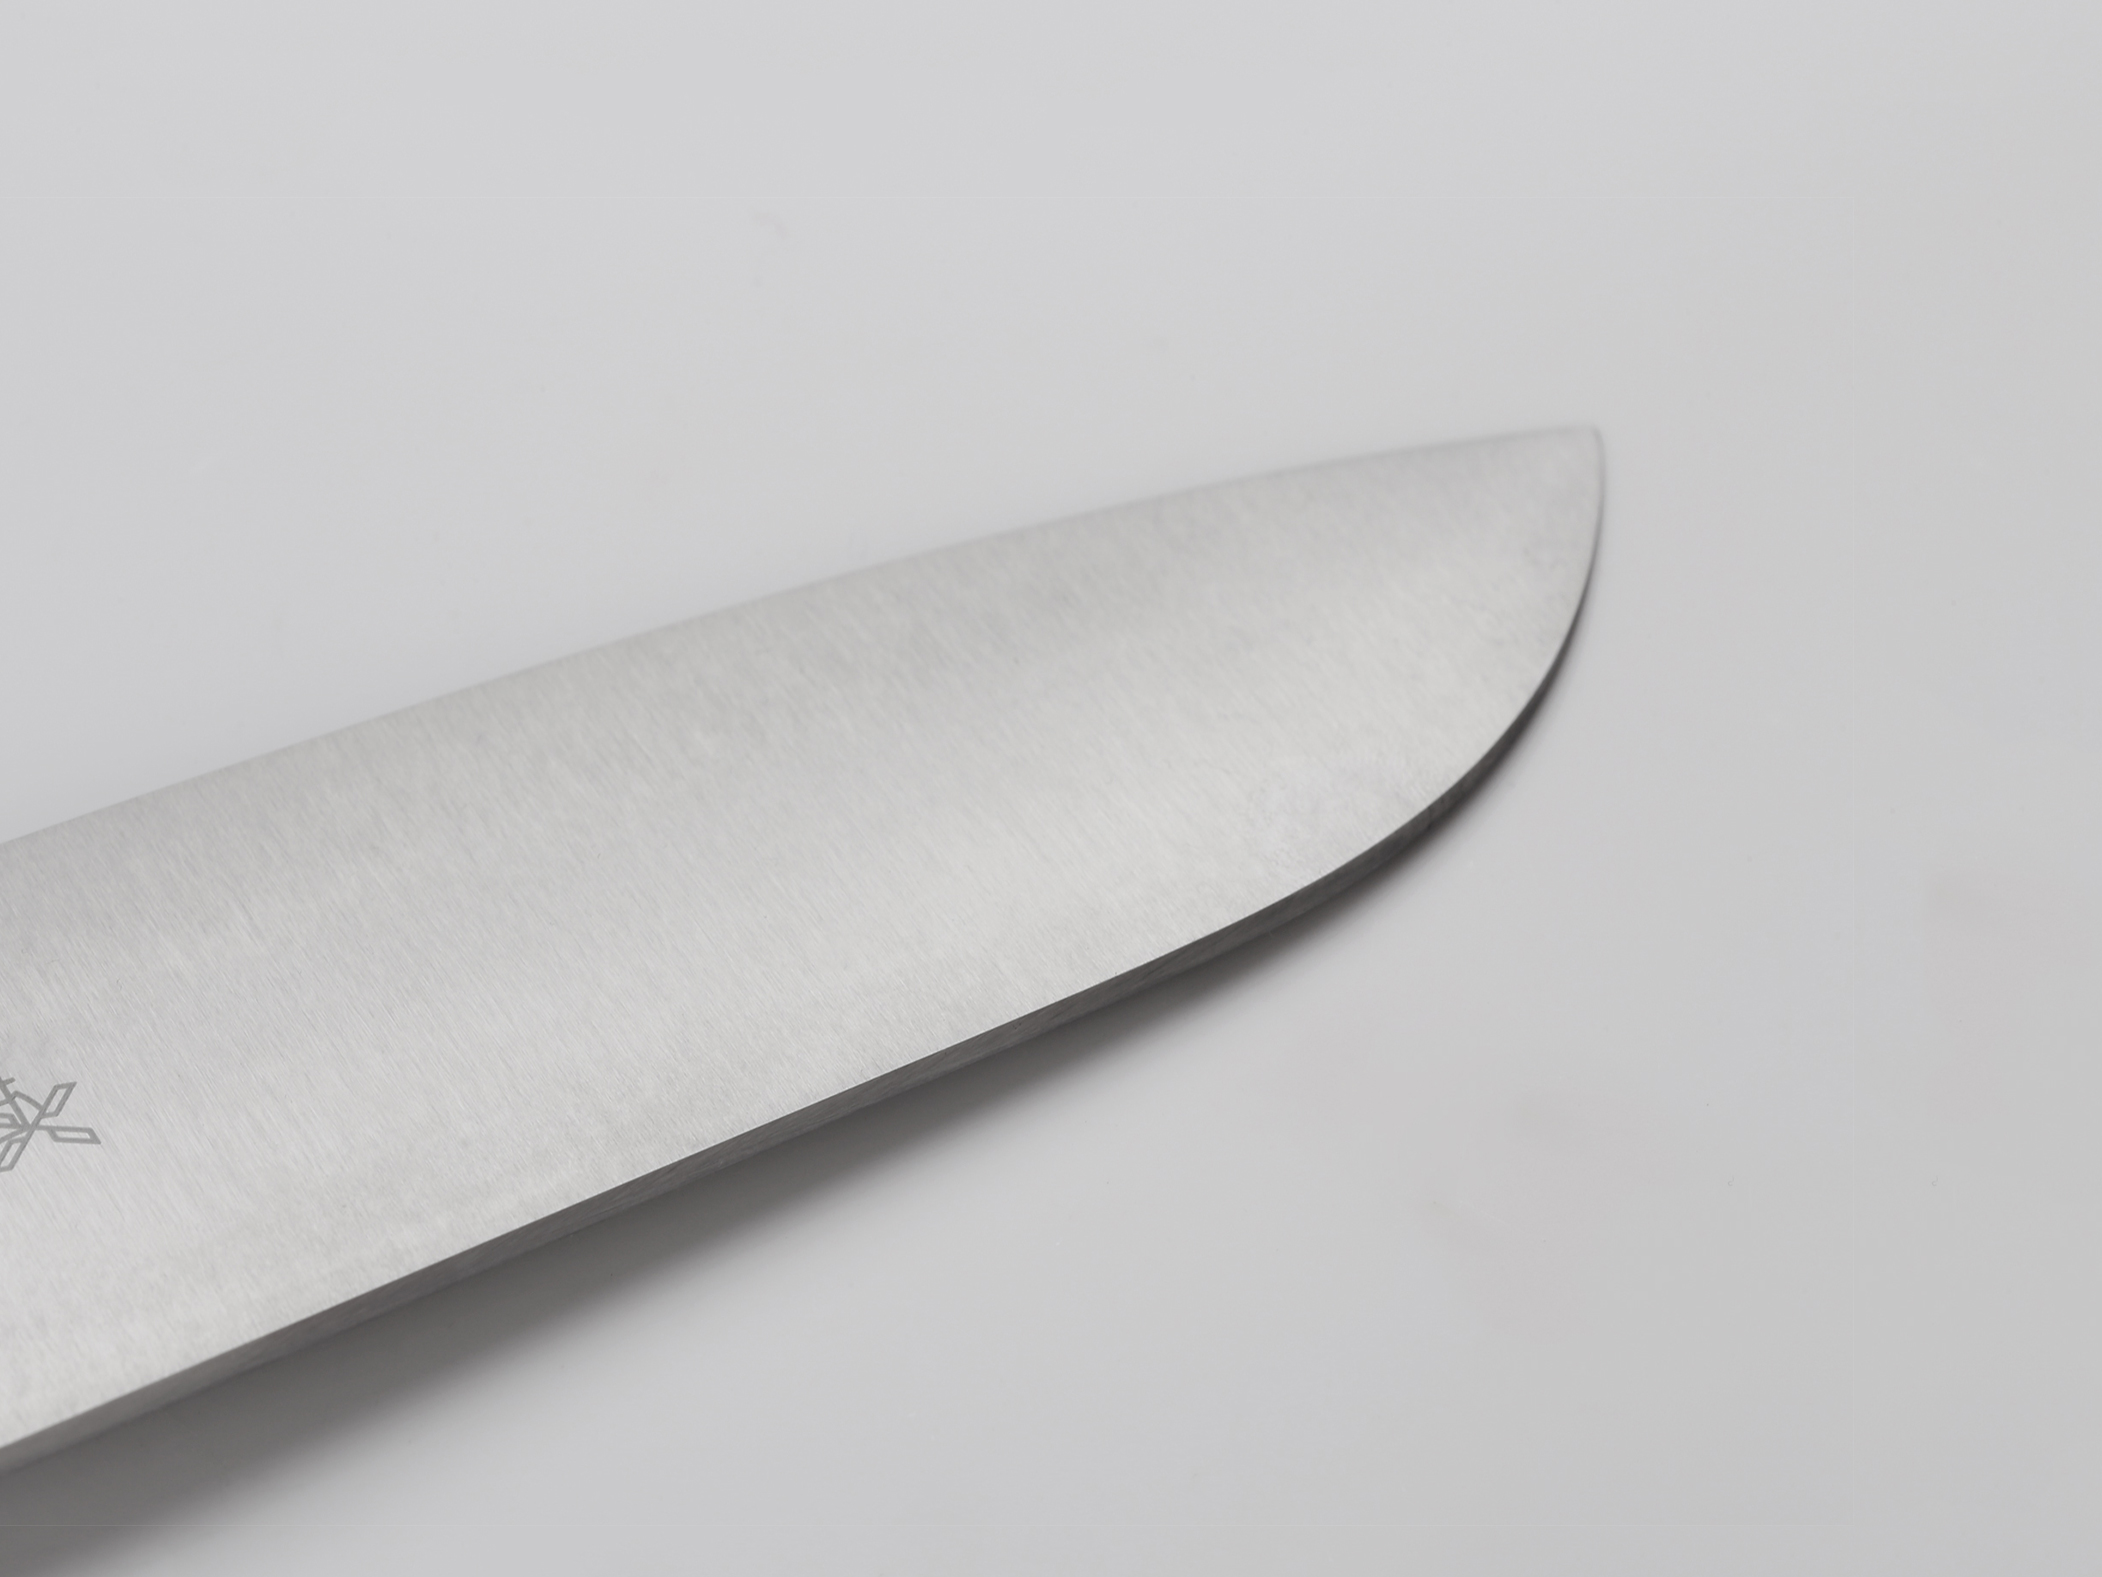 Klinge eines Santoku Kochmessers der Marke Windmühlenmesser. Das Modell trägt den Titel „Kochmesser Santoku“